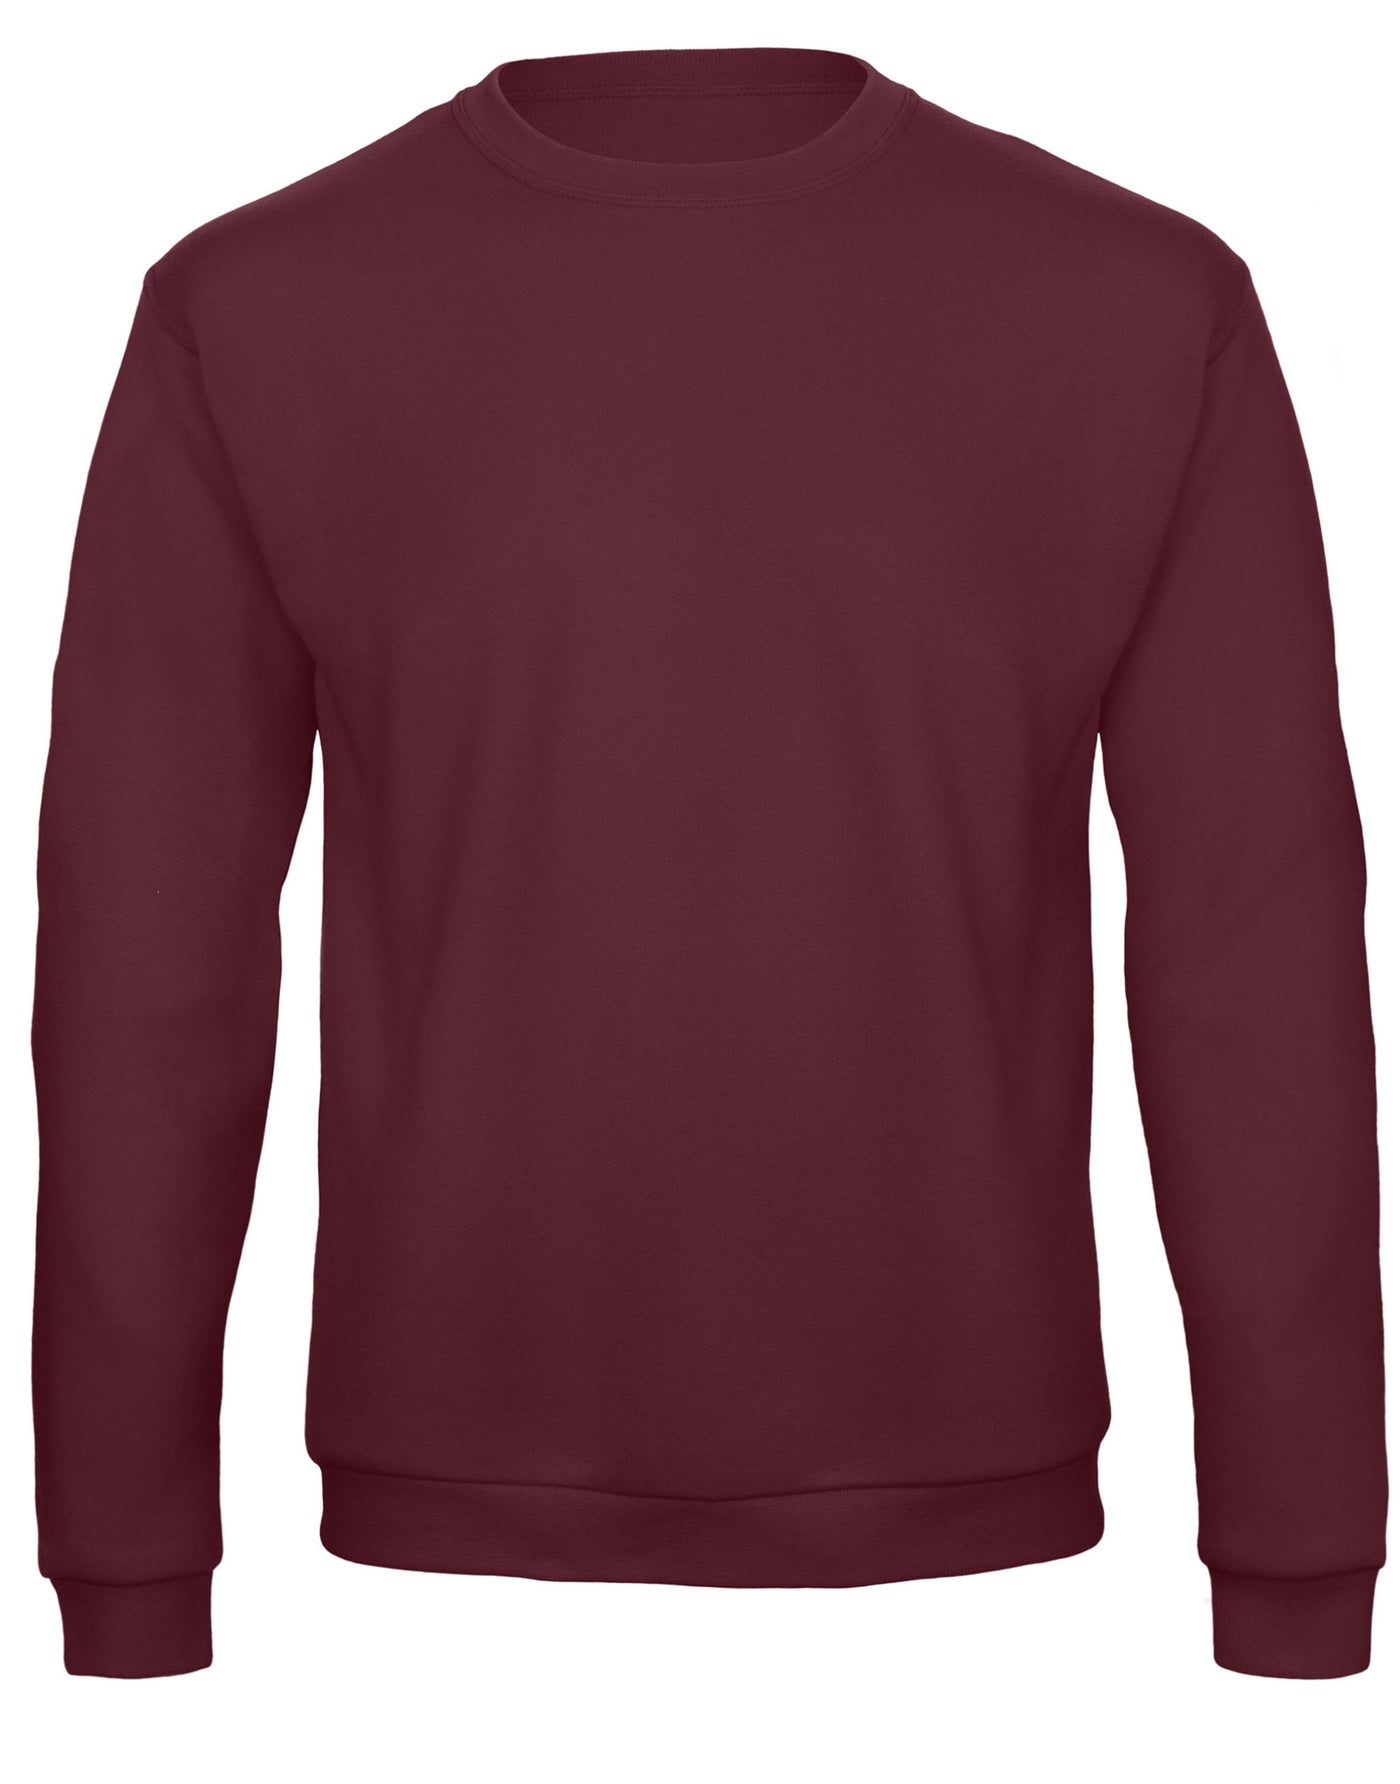 Burgundy Standard Fit Sweatshirt